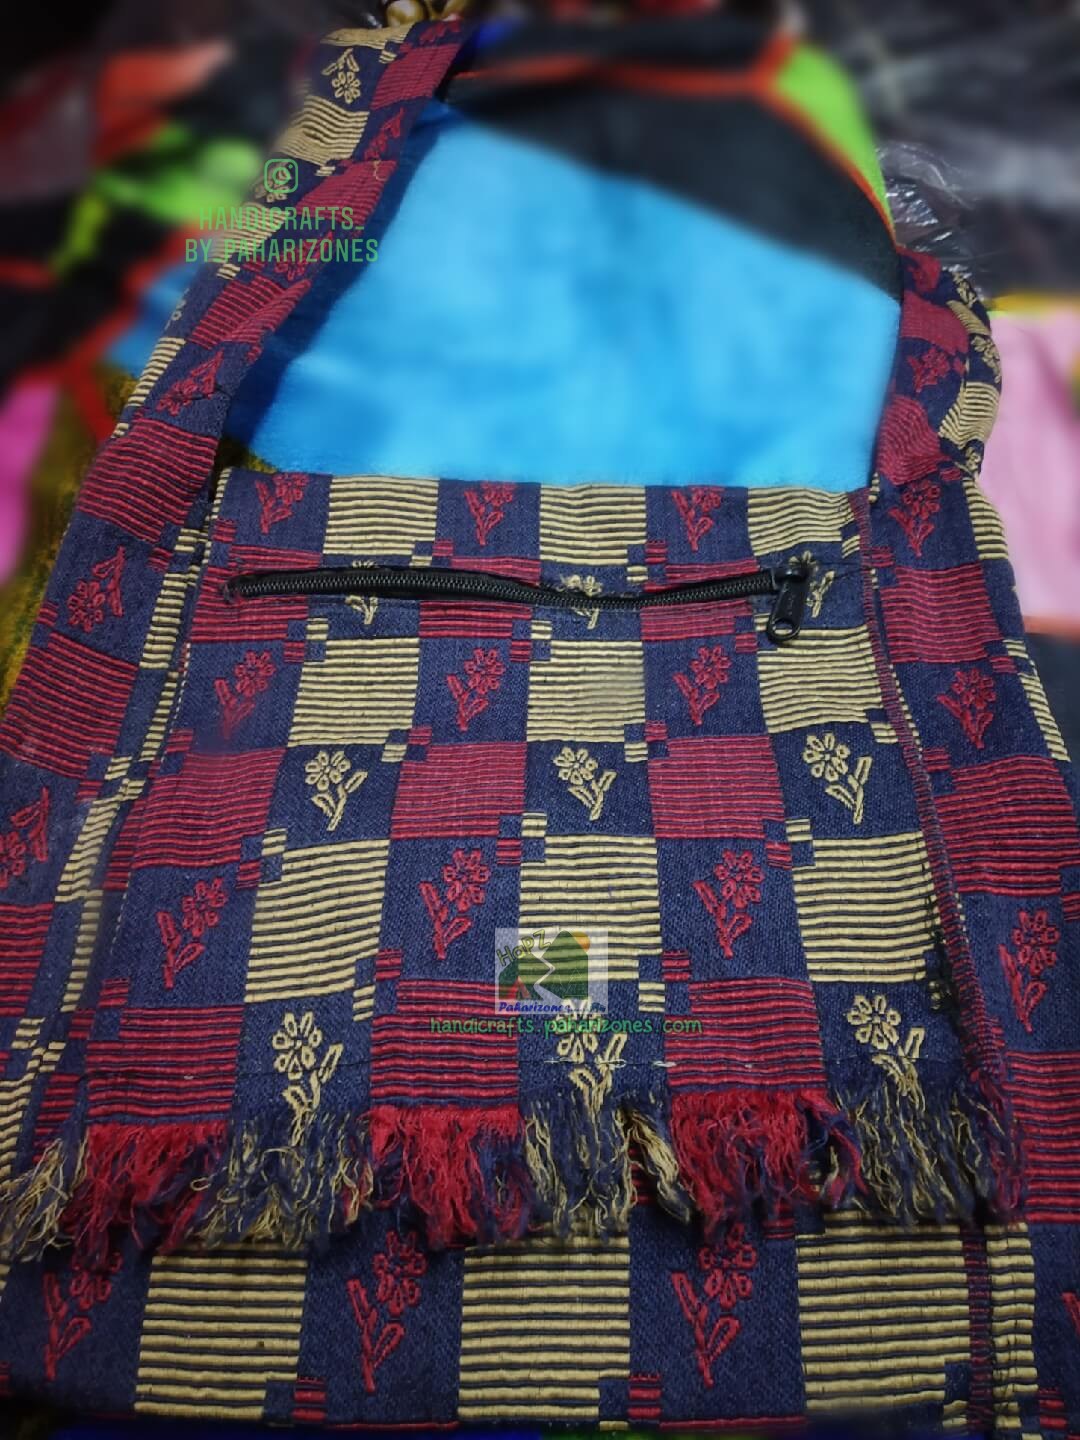 Denim Scraps Slow Stitch Embroidery Handmade Purse/Bag